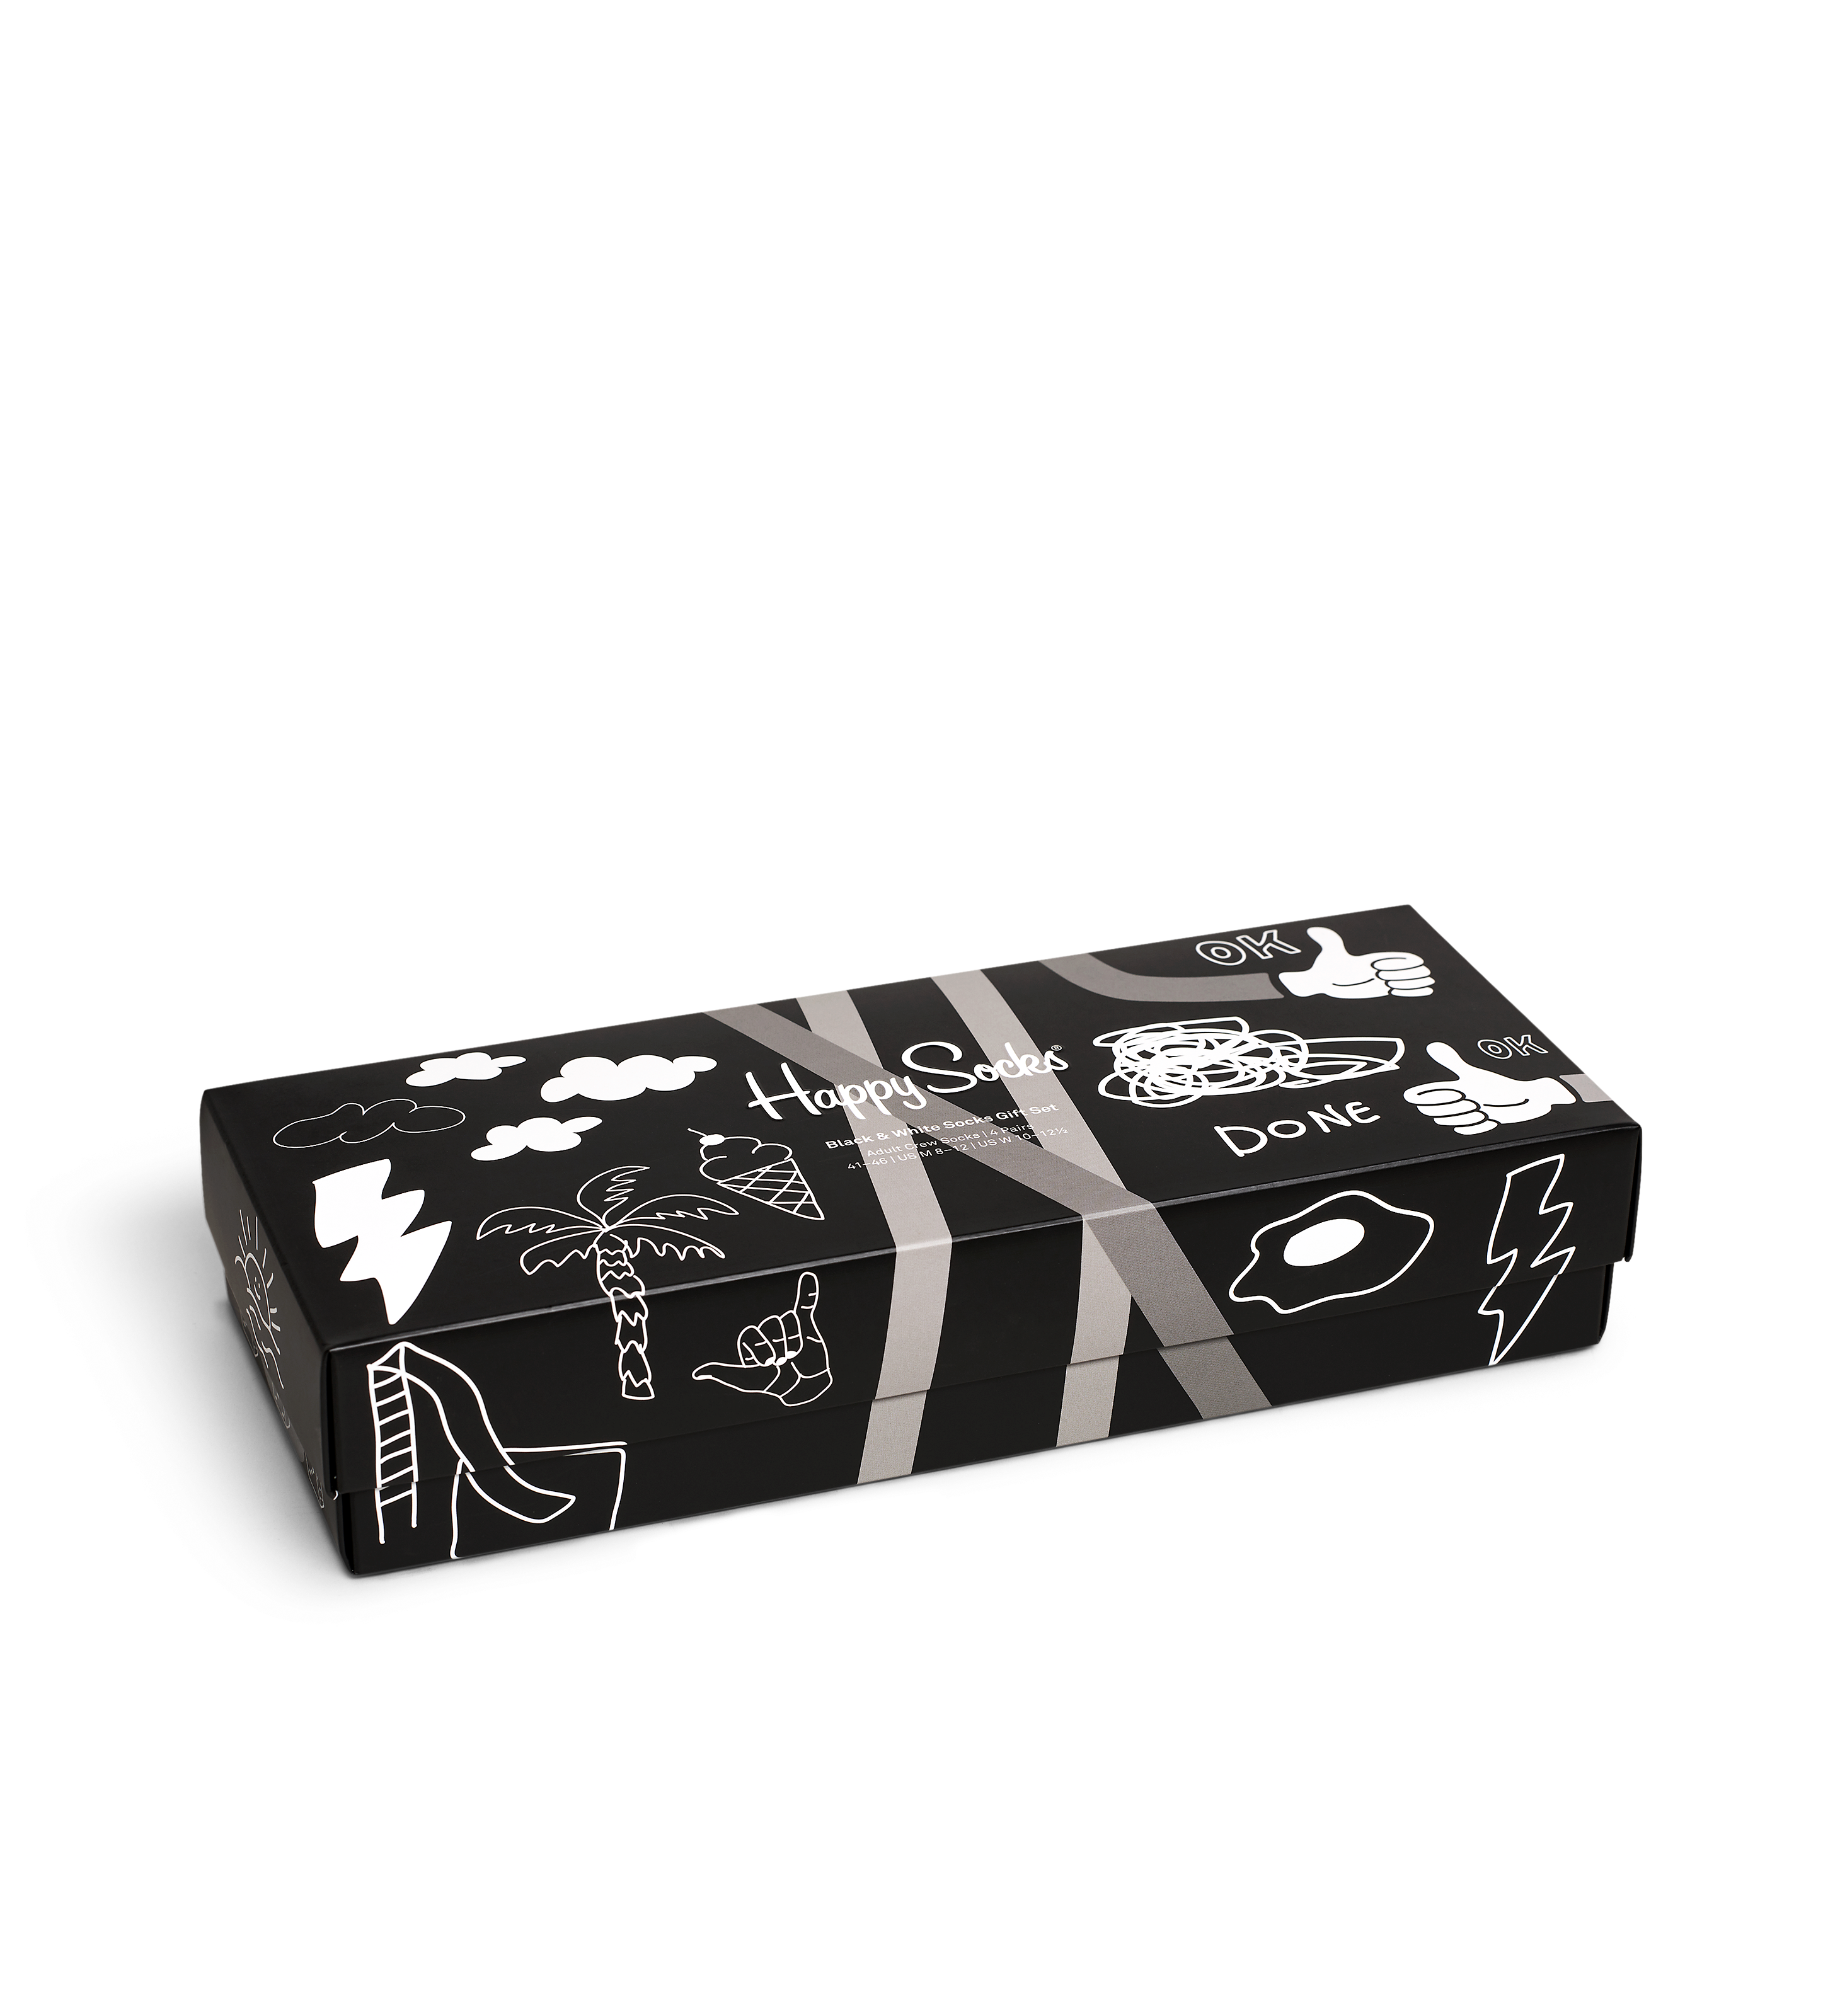 Sockstar Original Sock Clips Premium Gift Box Black & White Edition - 